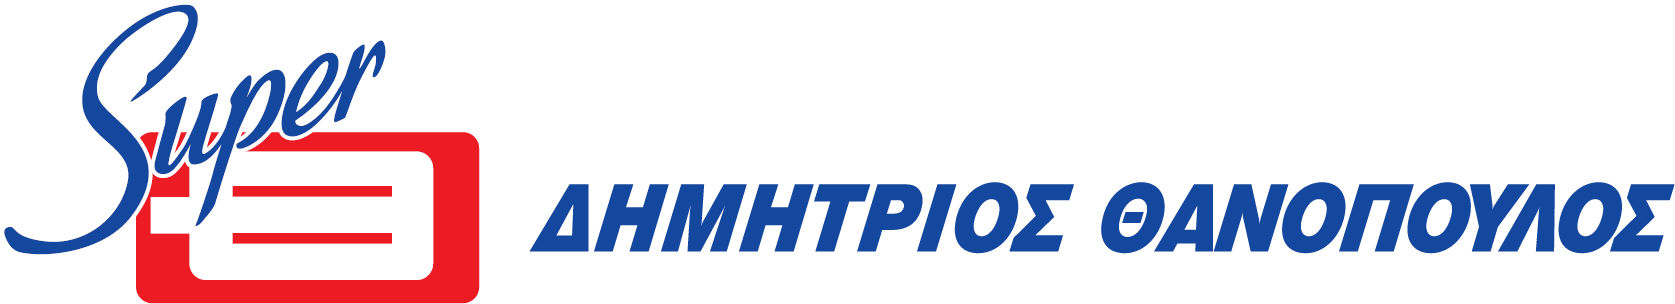 thanopoulos logo